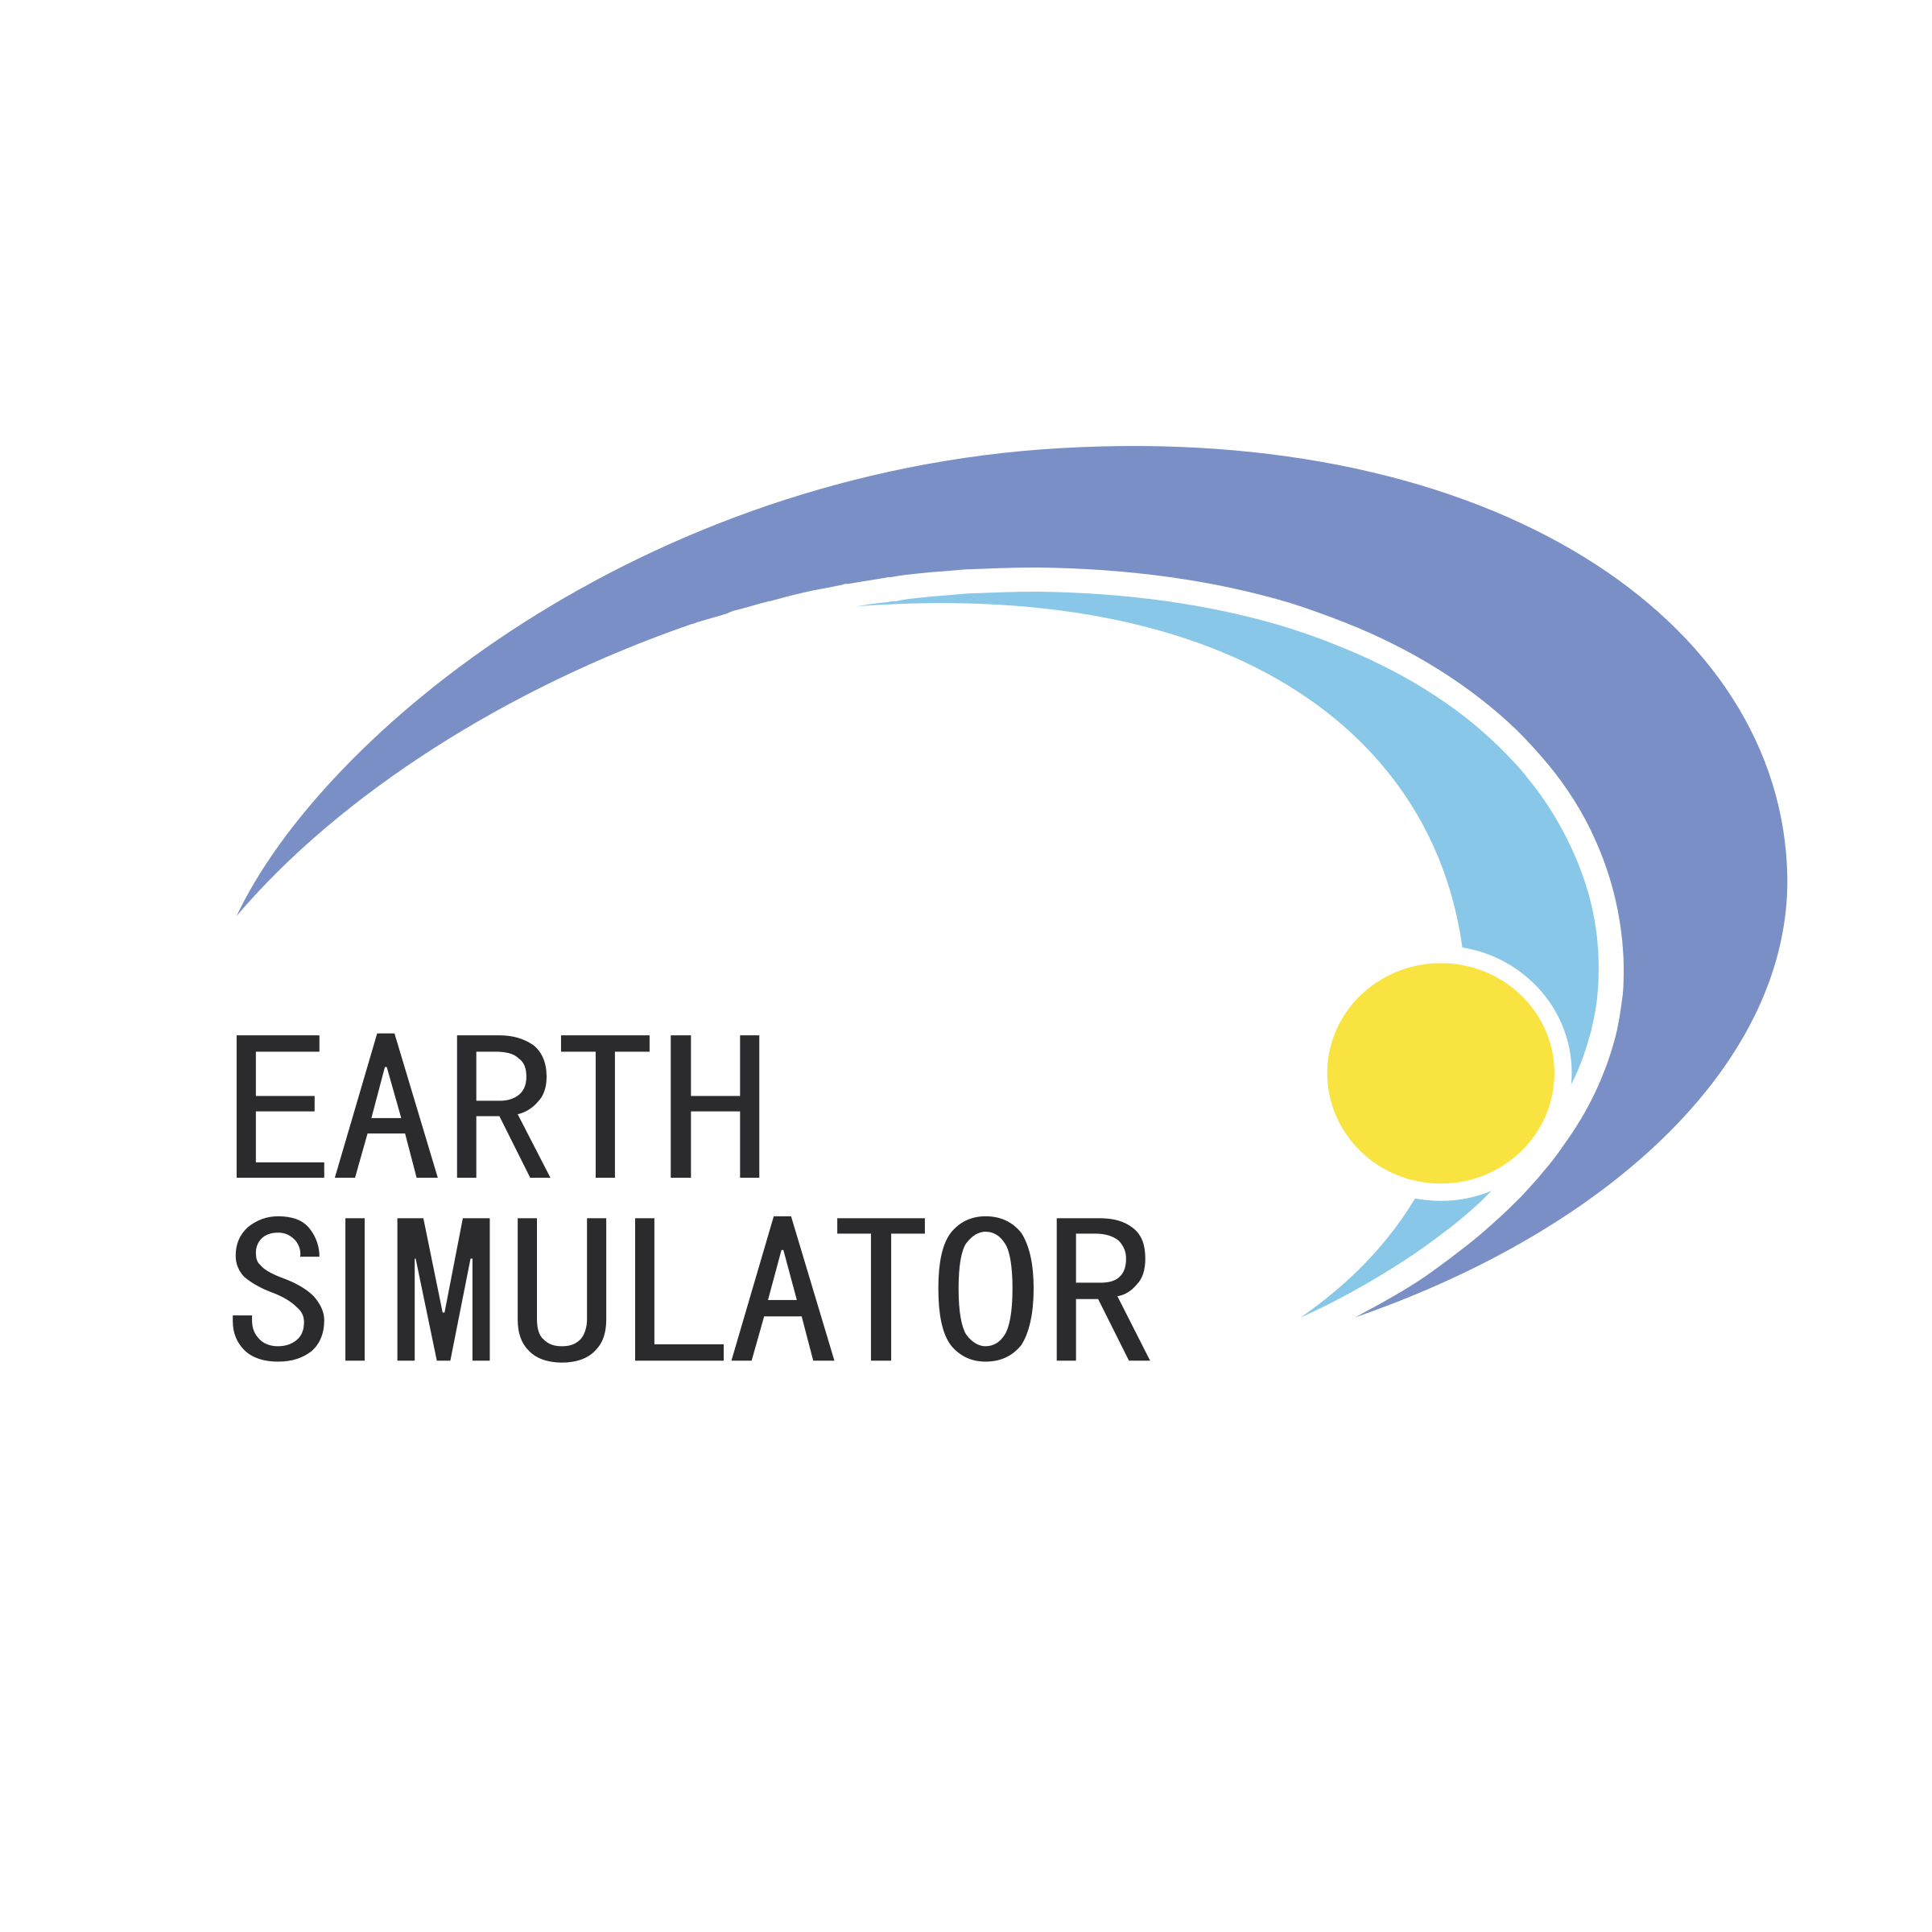 Simulator Logo - Earth Simulator Logo PNG Transparent & SVG Vector - Freebie Supply